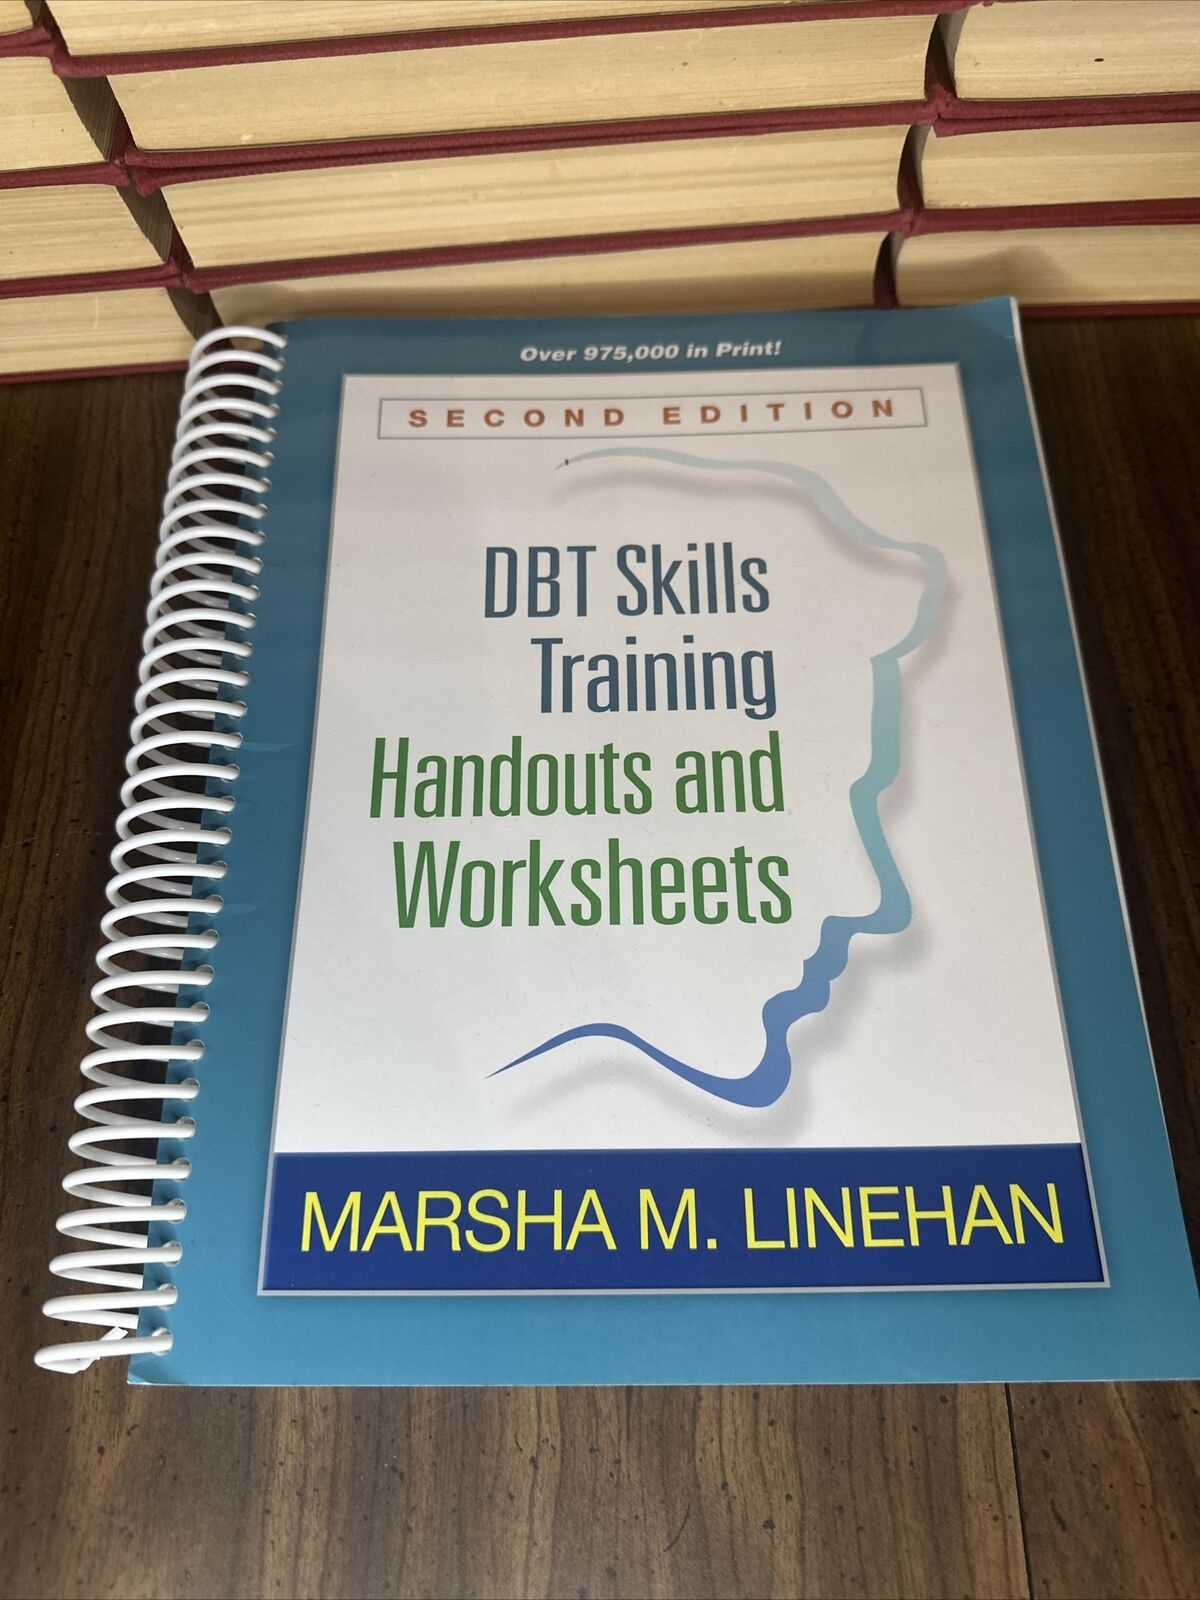 Dbt Skills Training Handouts And Worksheets By Marsha M Linehan